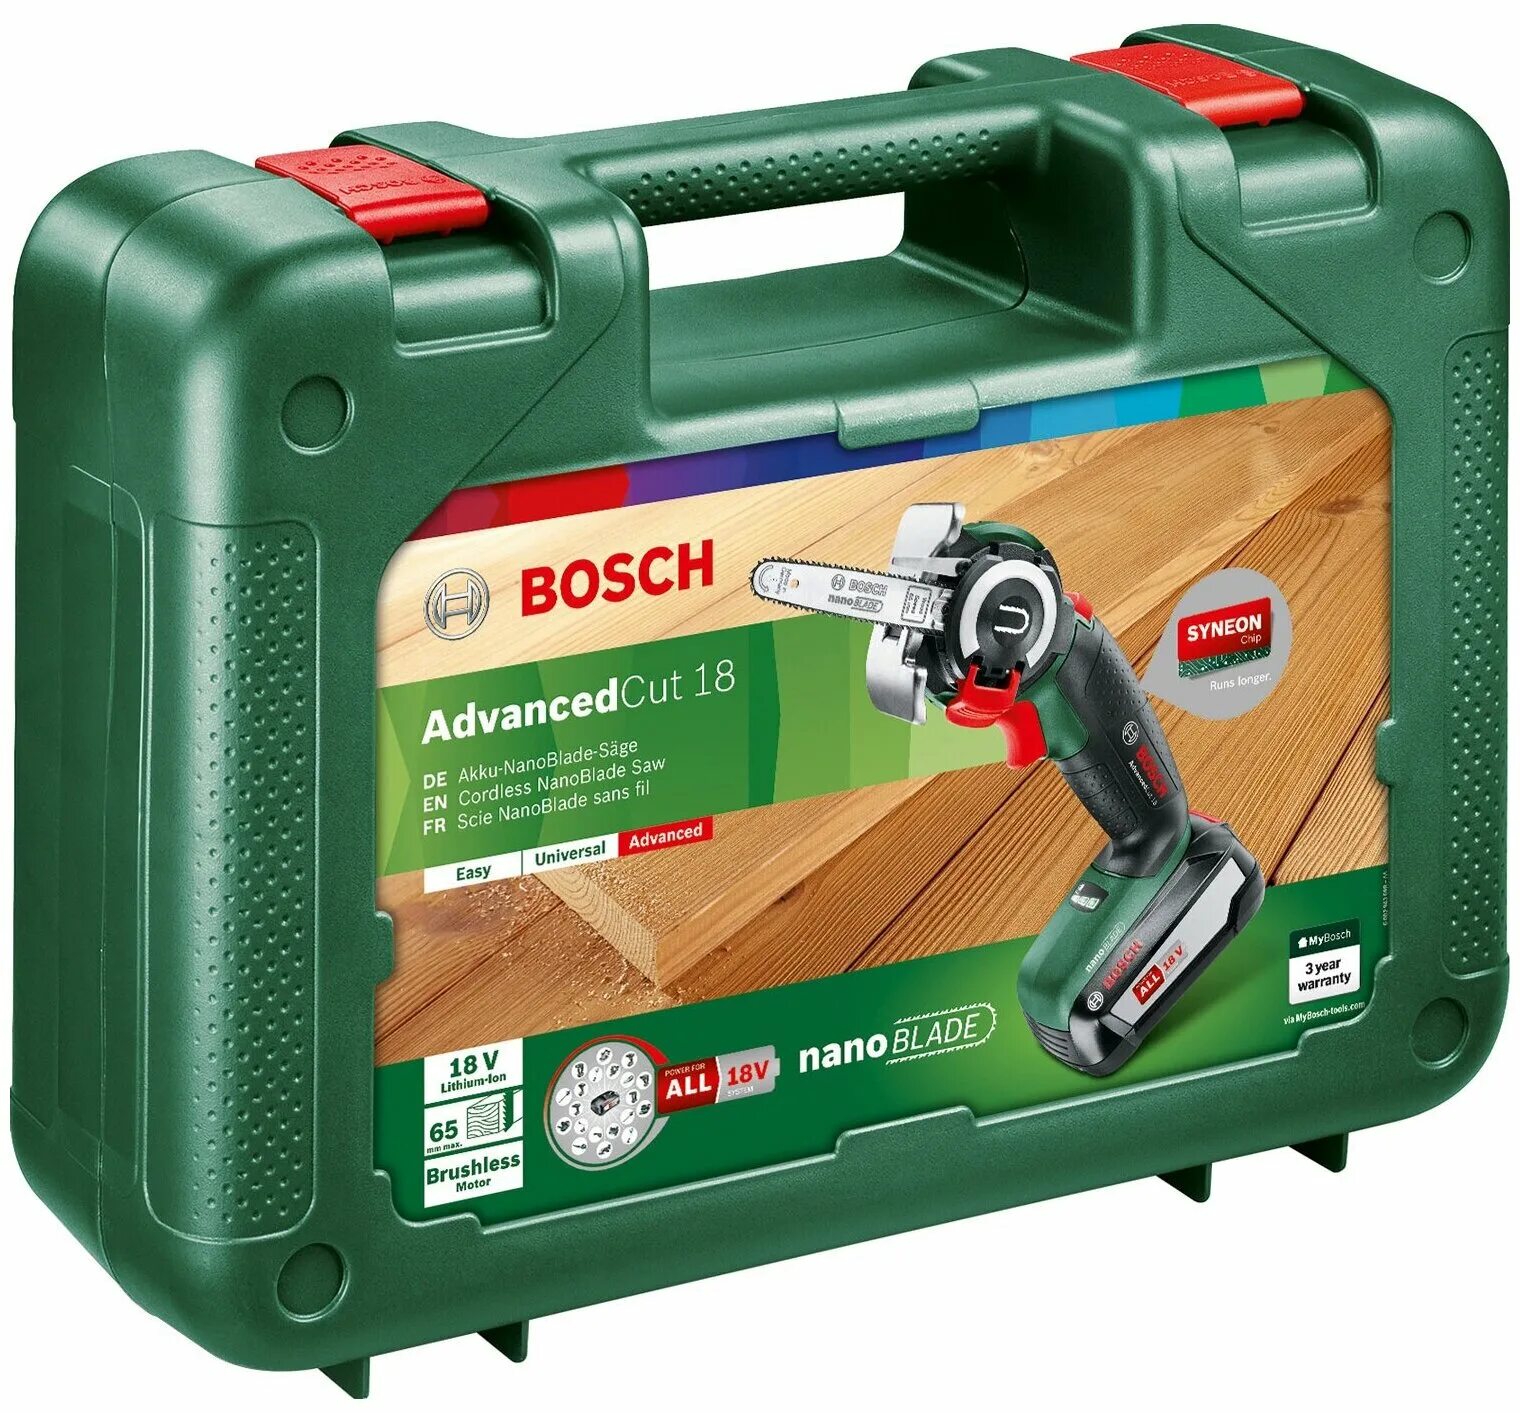 Цена и качество аккумуляторных пил. Аккумуляторная мини-цепная пила Bosch ADVANCEDCUT 18. Аккумуляторная пила Bosch ADVANCEDCUT 18 (06033d5101). Аккумуляторная мини пила бош 18в. Bosch ADVANCEDCUT 18 Set.